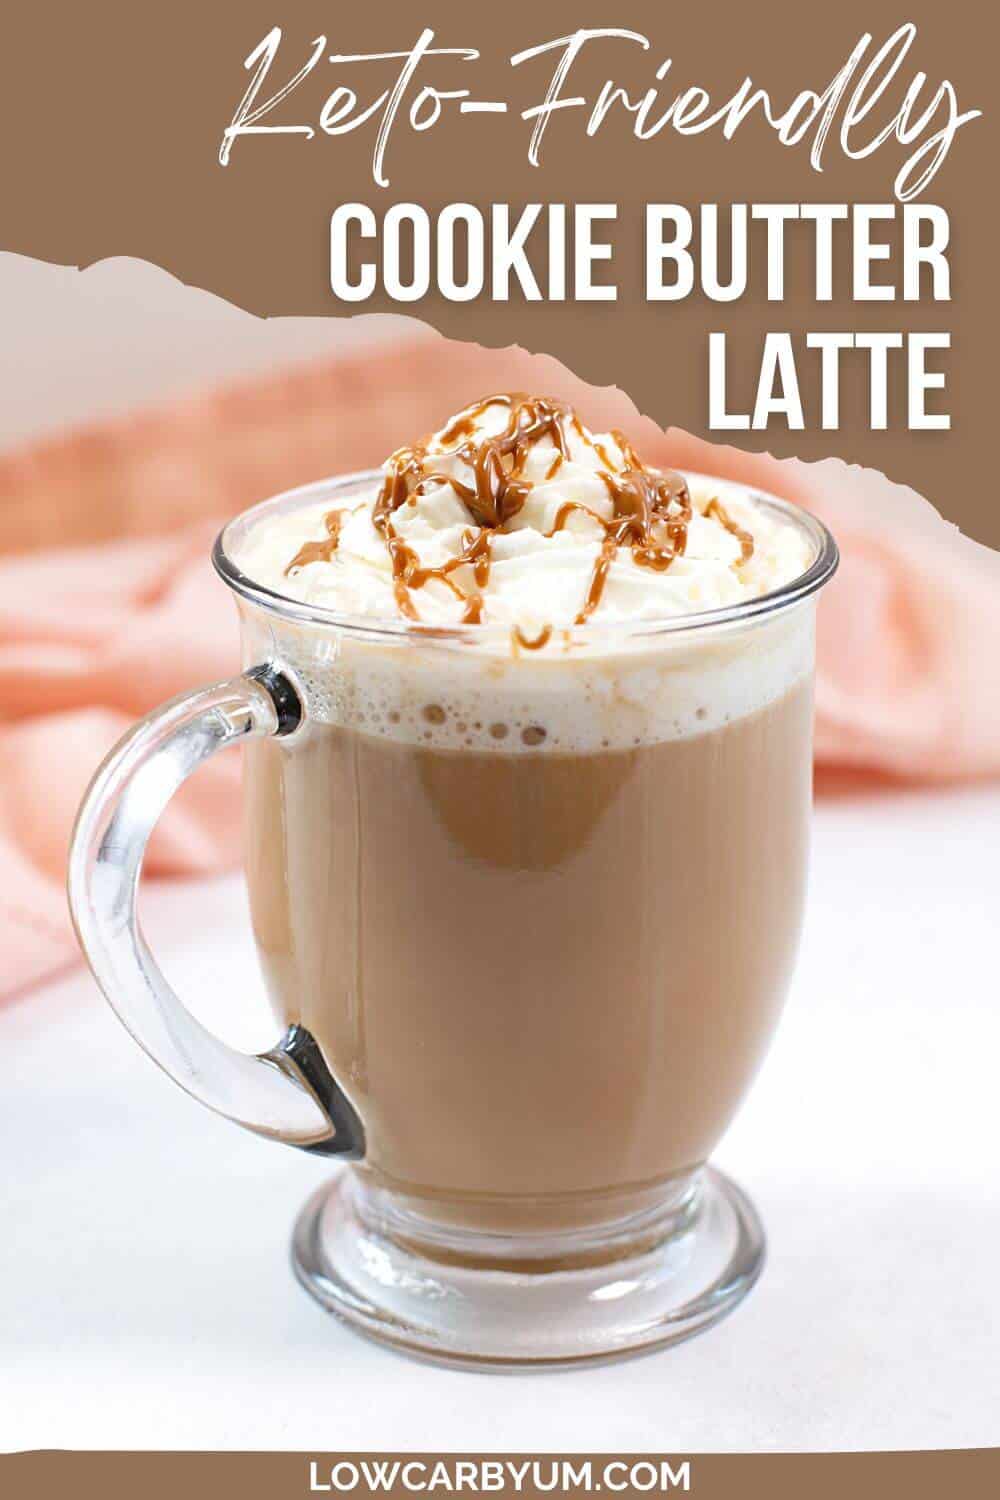 cookie butter latte pinterest image.